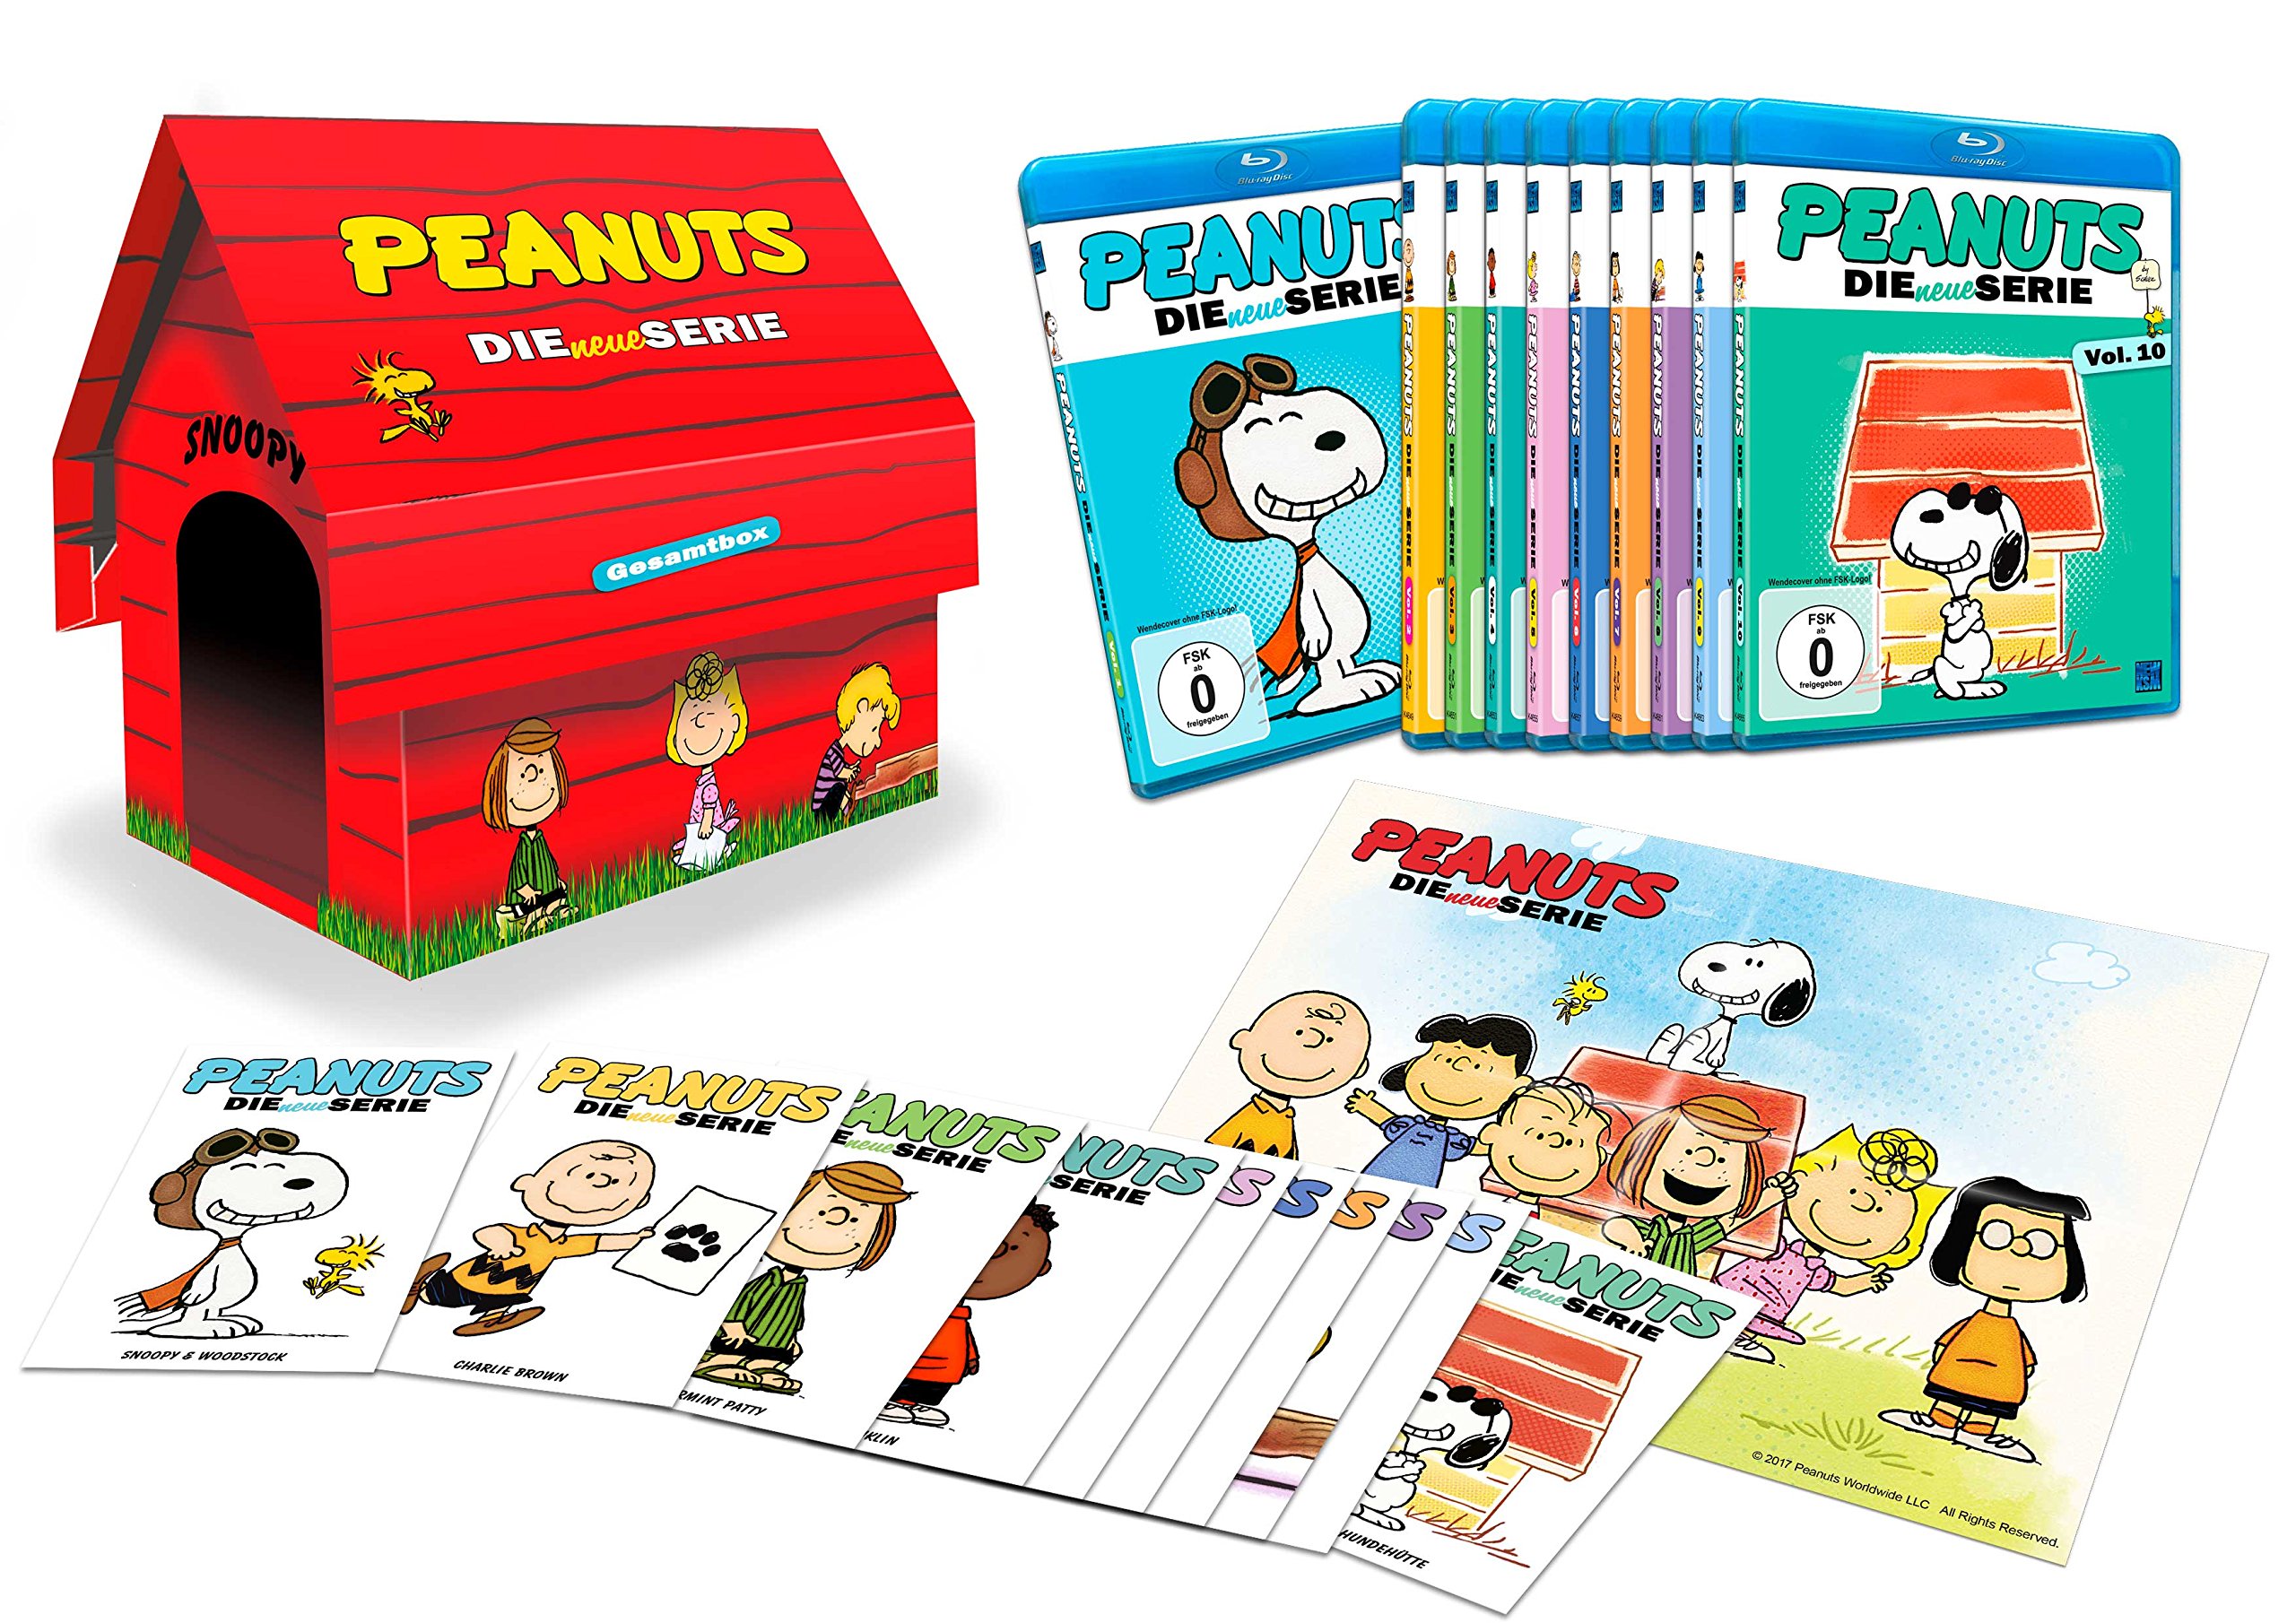 Peanuts - Die neue Serie - (Vol. 01 - Vol. 10) [Hundehütte] [Limited Edition] (10 Disc Set) [Blu-ray]